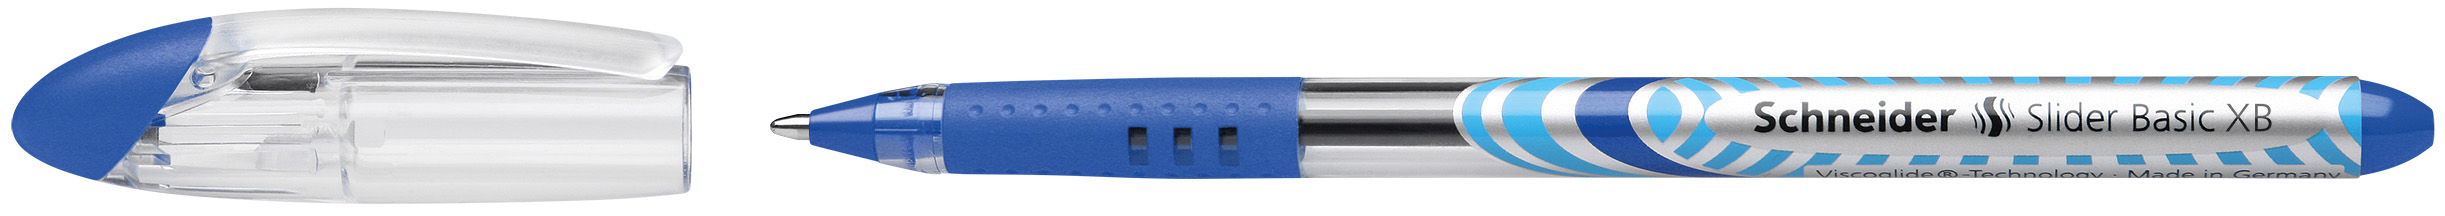 SCHNEIDER Stylo Slider Basic 1.4mm 151203 bleu, XB bleu, XB